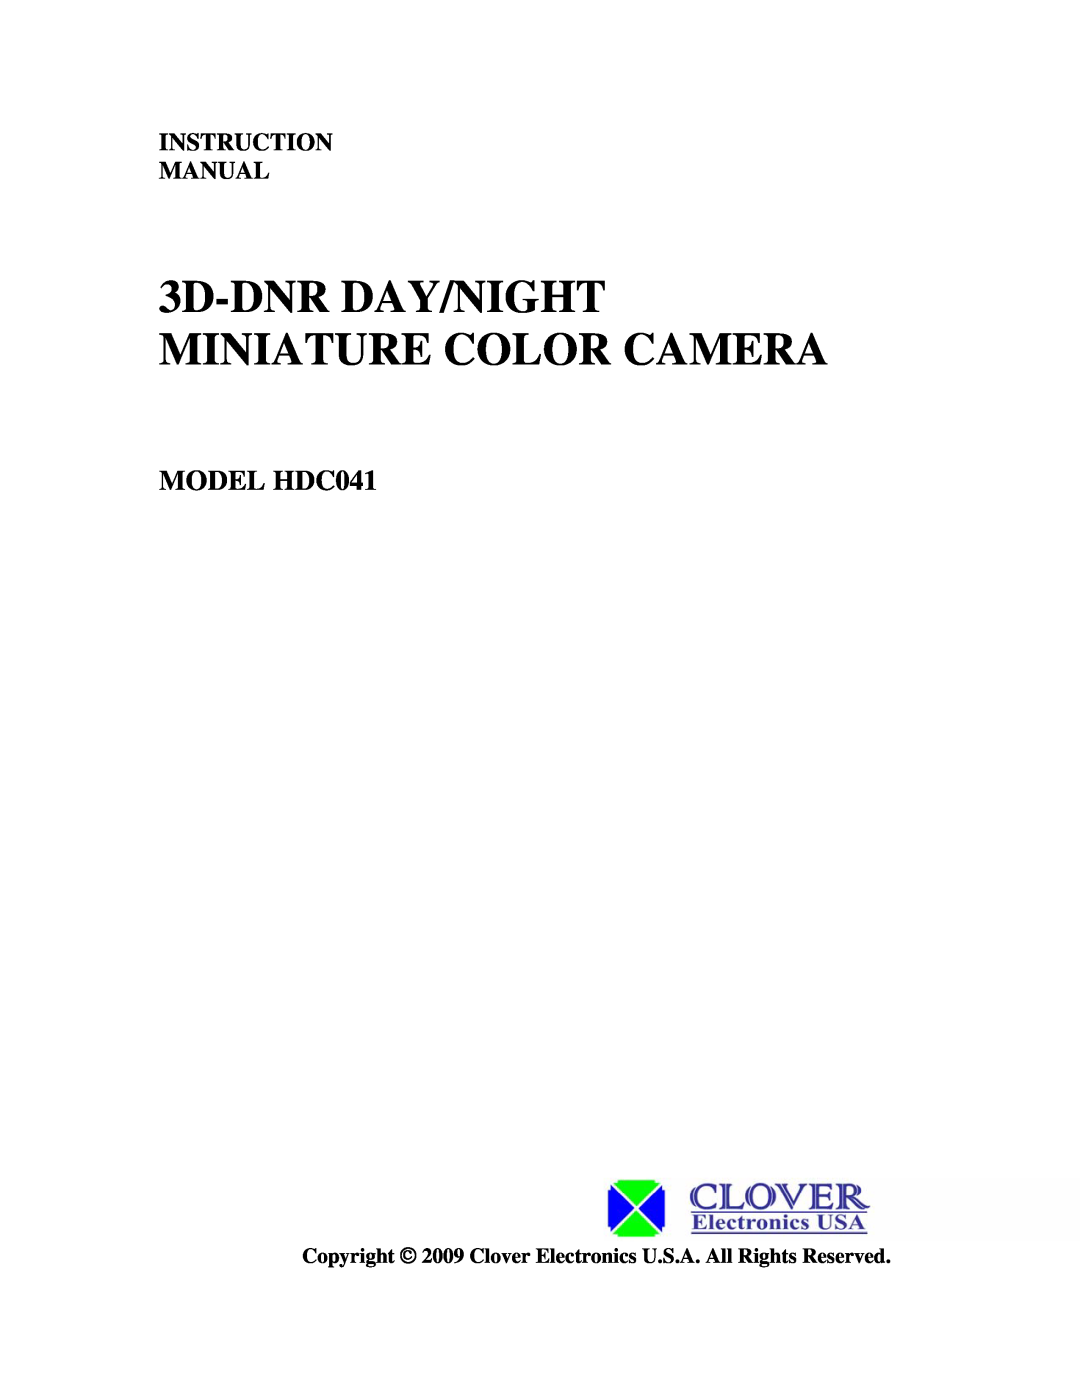 Clover Electronics instruction manual MODEL HDC041, Instruction Manual, 3D-DNR DAY/NIGHT MINIATURE COLOR CAMERA 